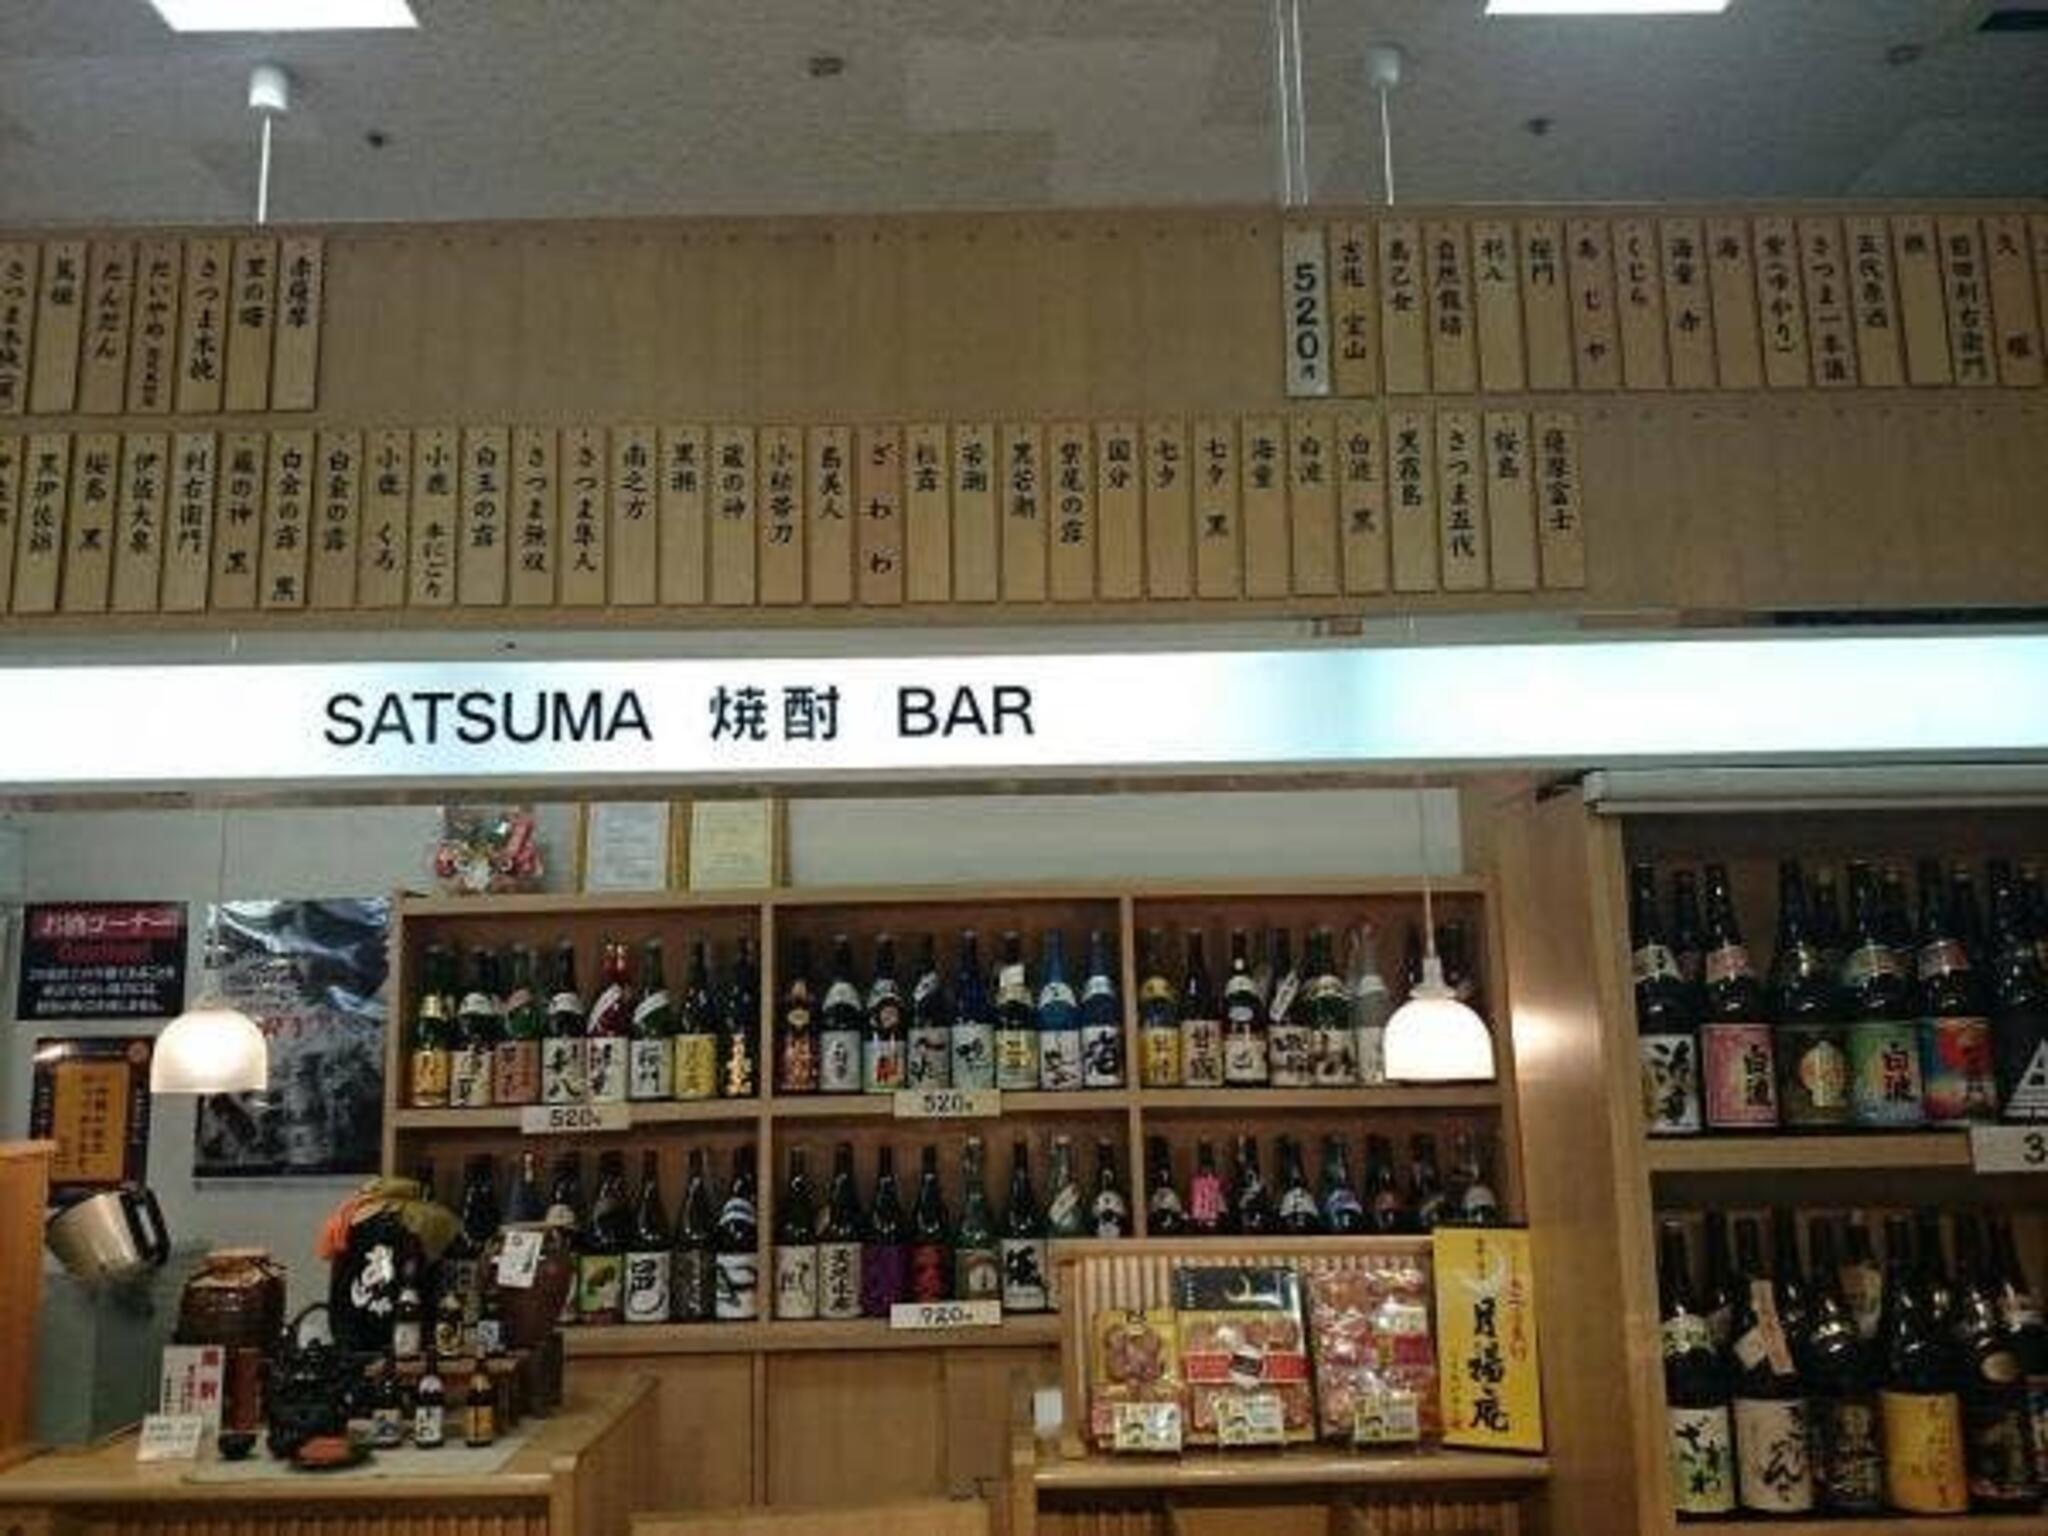 SATSUMA 焼酎バーの代表写真8